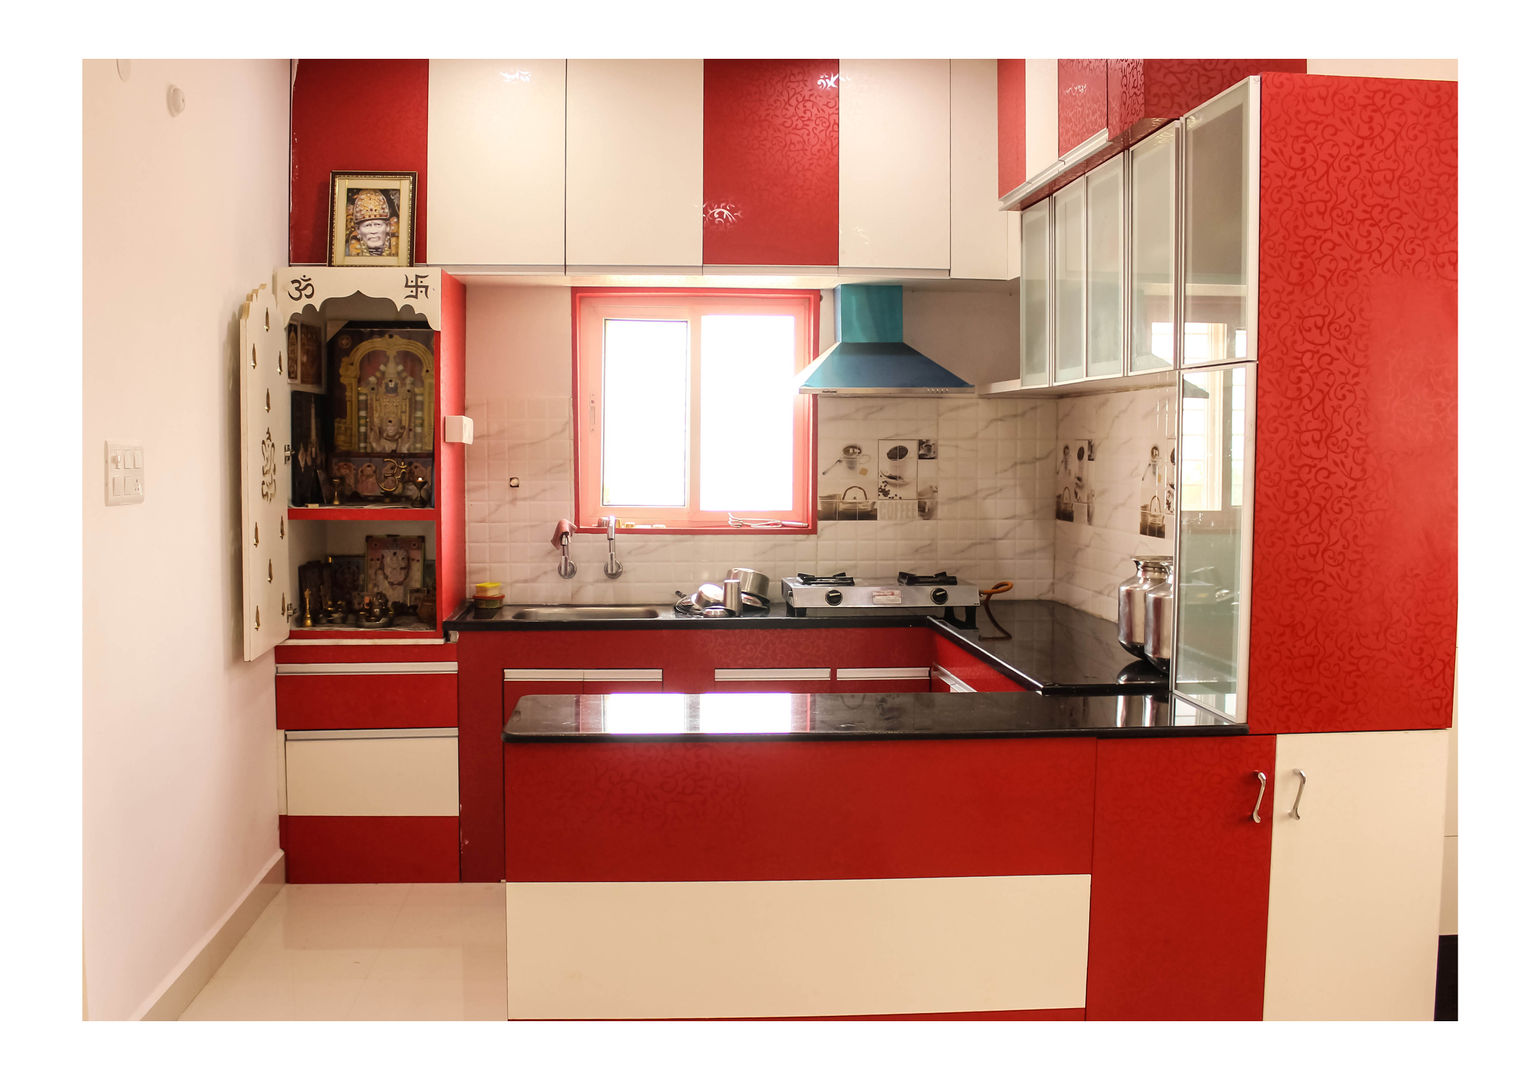 2 Bedroom Flat at Manikonda, Happy Homes Designers Happy Homes Designers Moderne keukens Kasten & planken